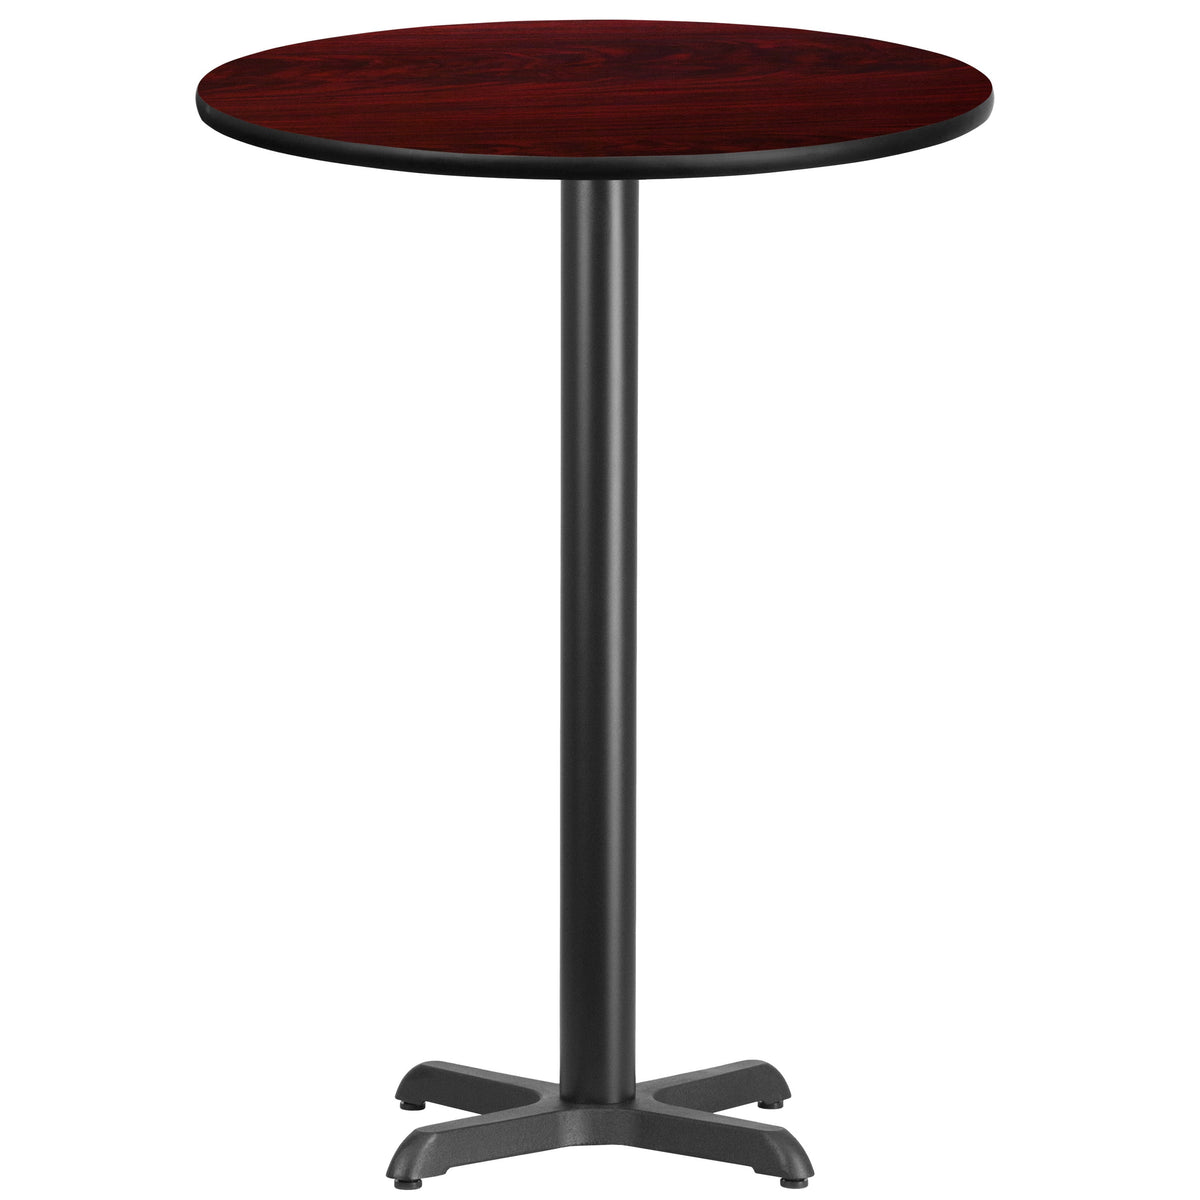 Mahogany |#| 30inch Round Mahogany Laminate Table Top with 22inch x 22inch Bar Height Table Base